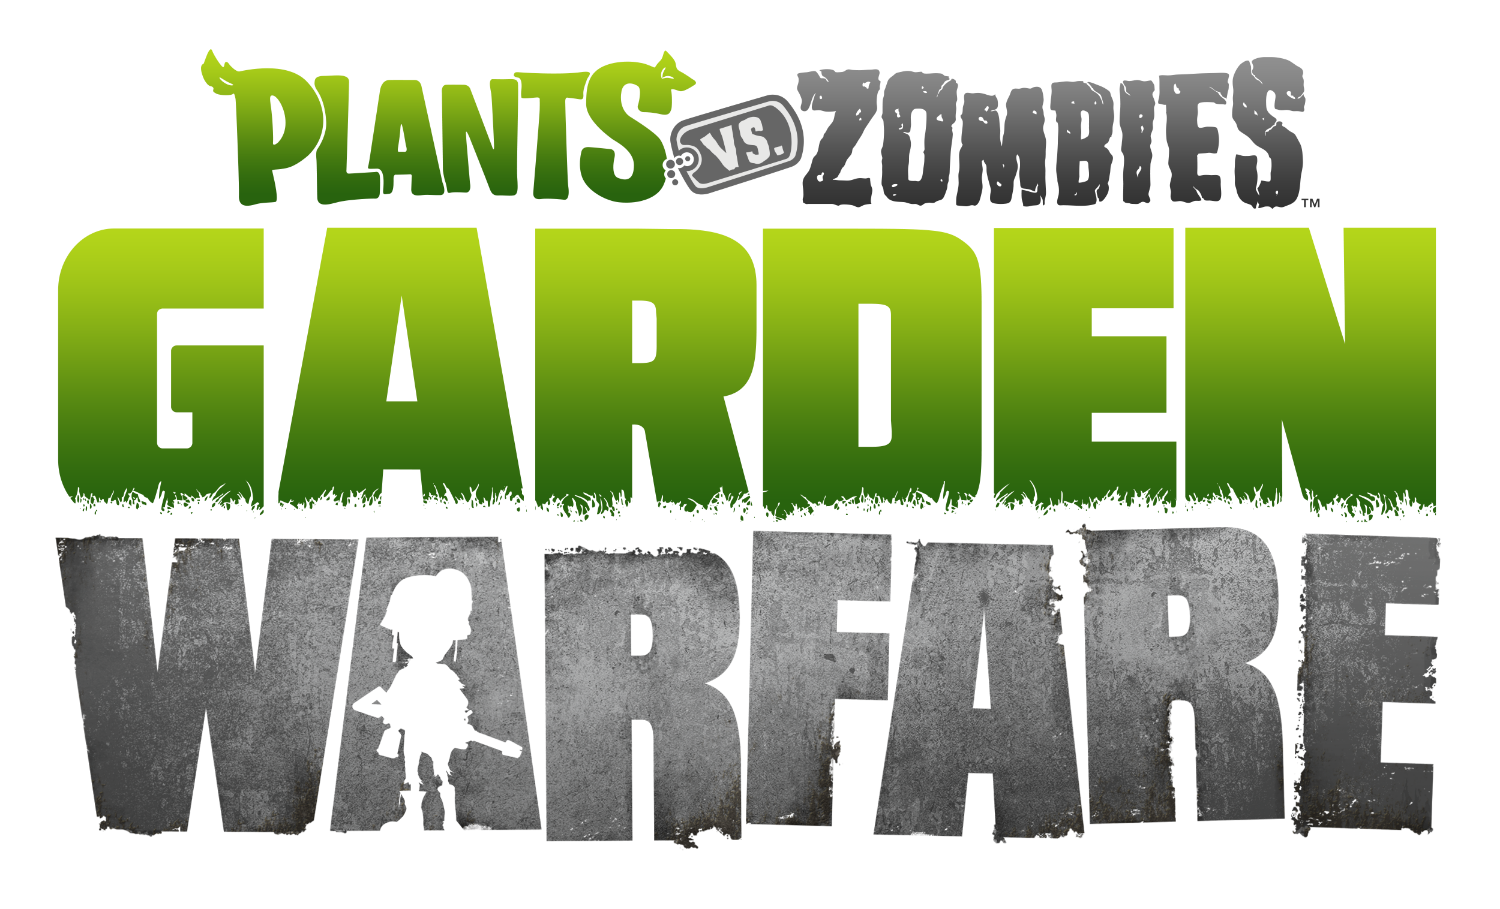 plants vs zombies garden warfare free download for pc